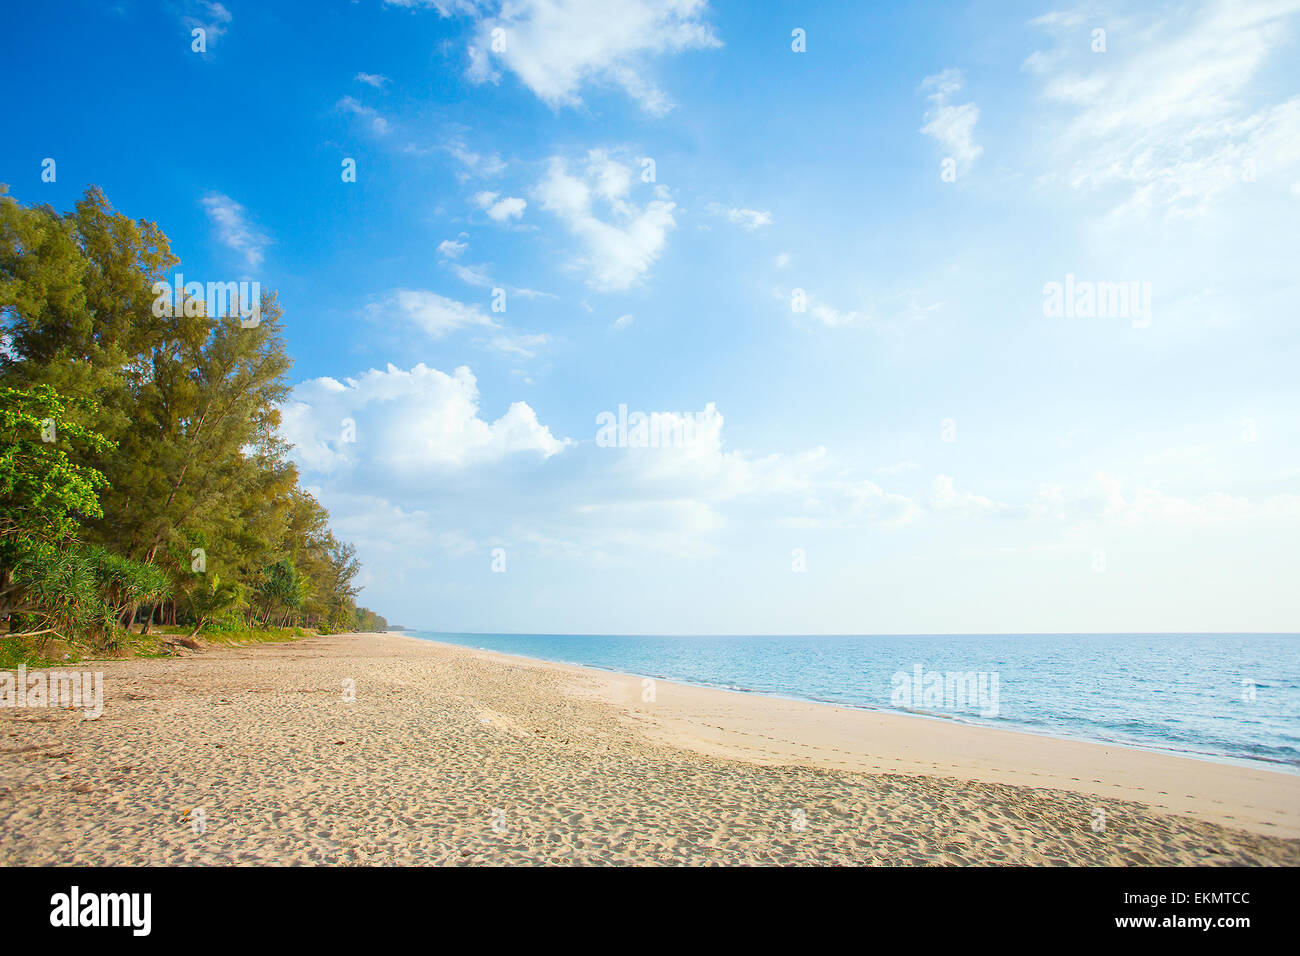 Sand beach and the ocean Stock Photo